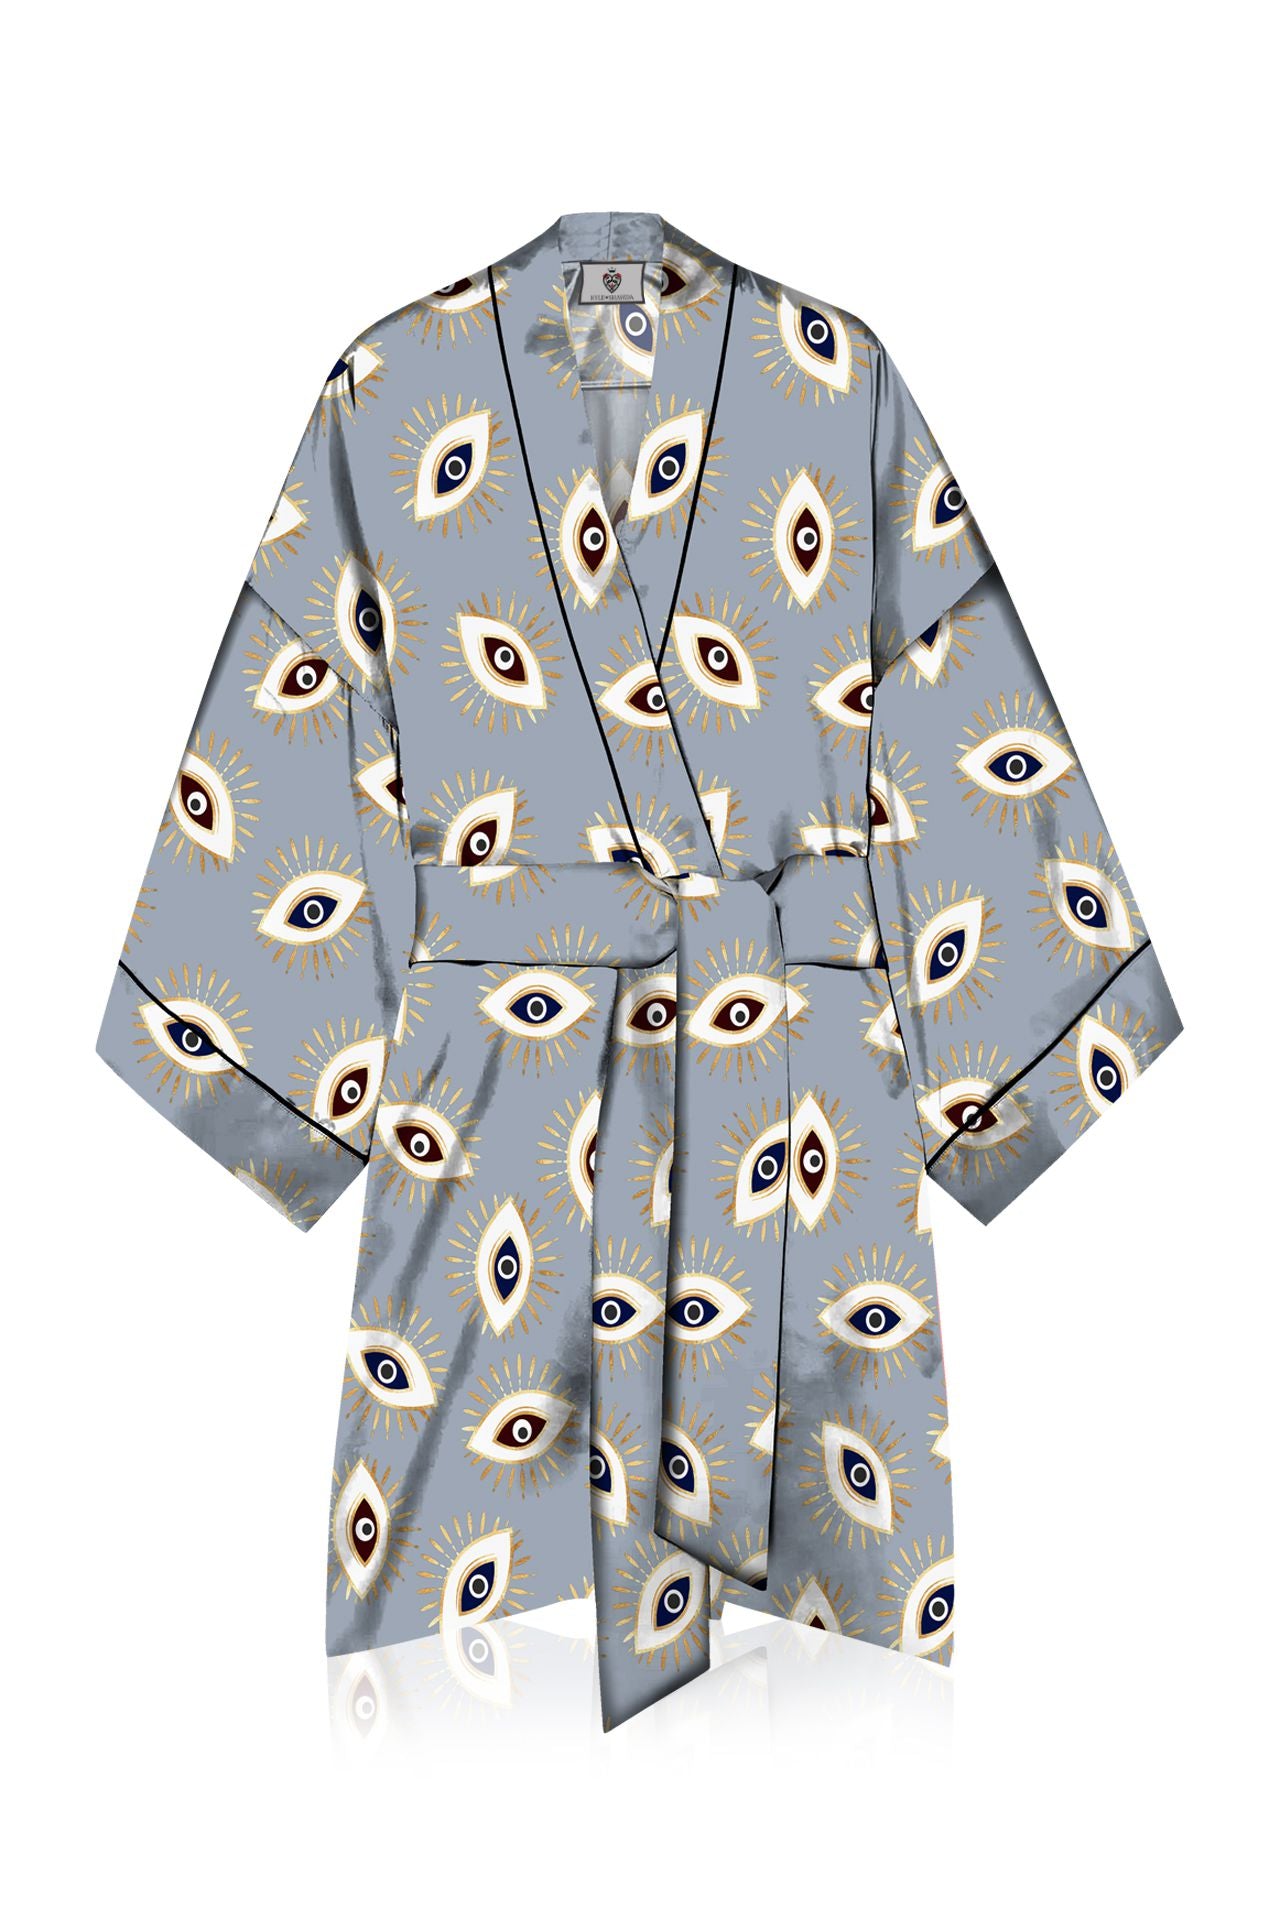 "grey robe womens" "Kyle X Shahida" "kimono short dresses" "women's short kimono"